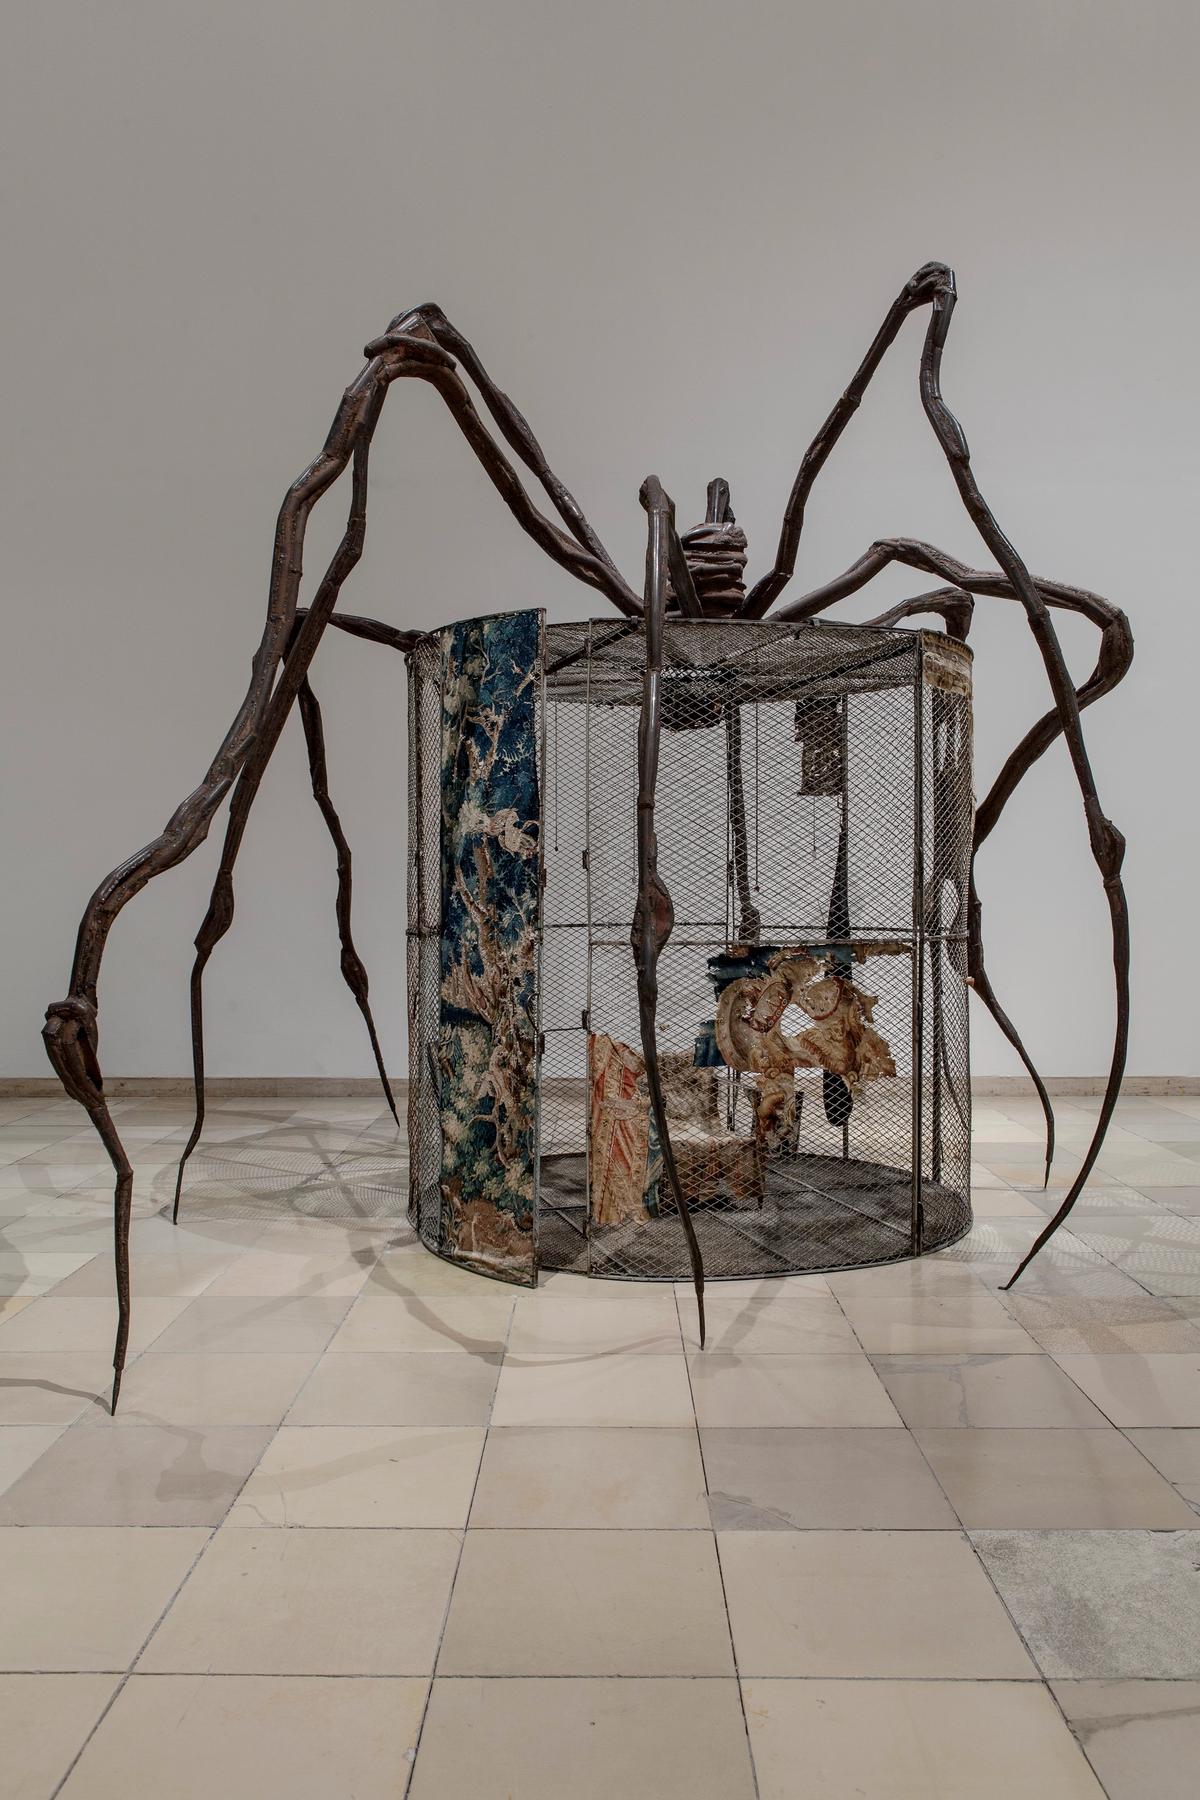 Louise Bourgeois's Spider (1997) © The Easton Foundation/VAGA at ARS, NY and DACS, London 2021. Photo: Maximilian Geuter